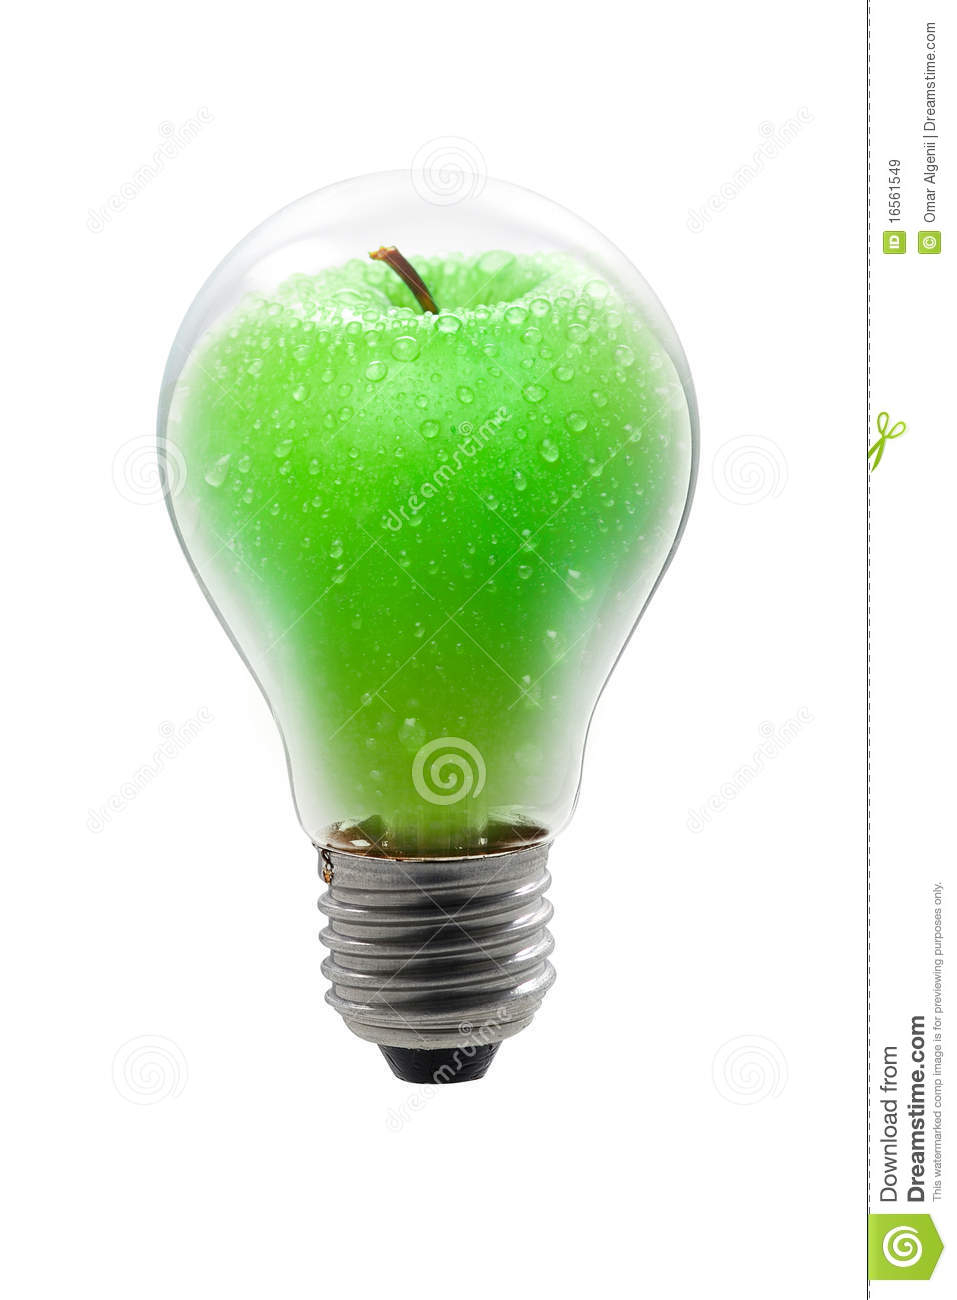 Apple Bulb Stock Image Image Of Isolated Apple Plant 16561549 inside size 957 X 1300